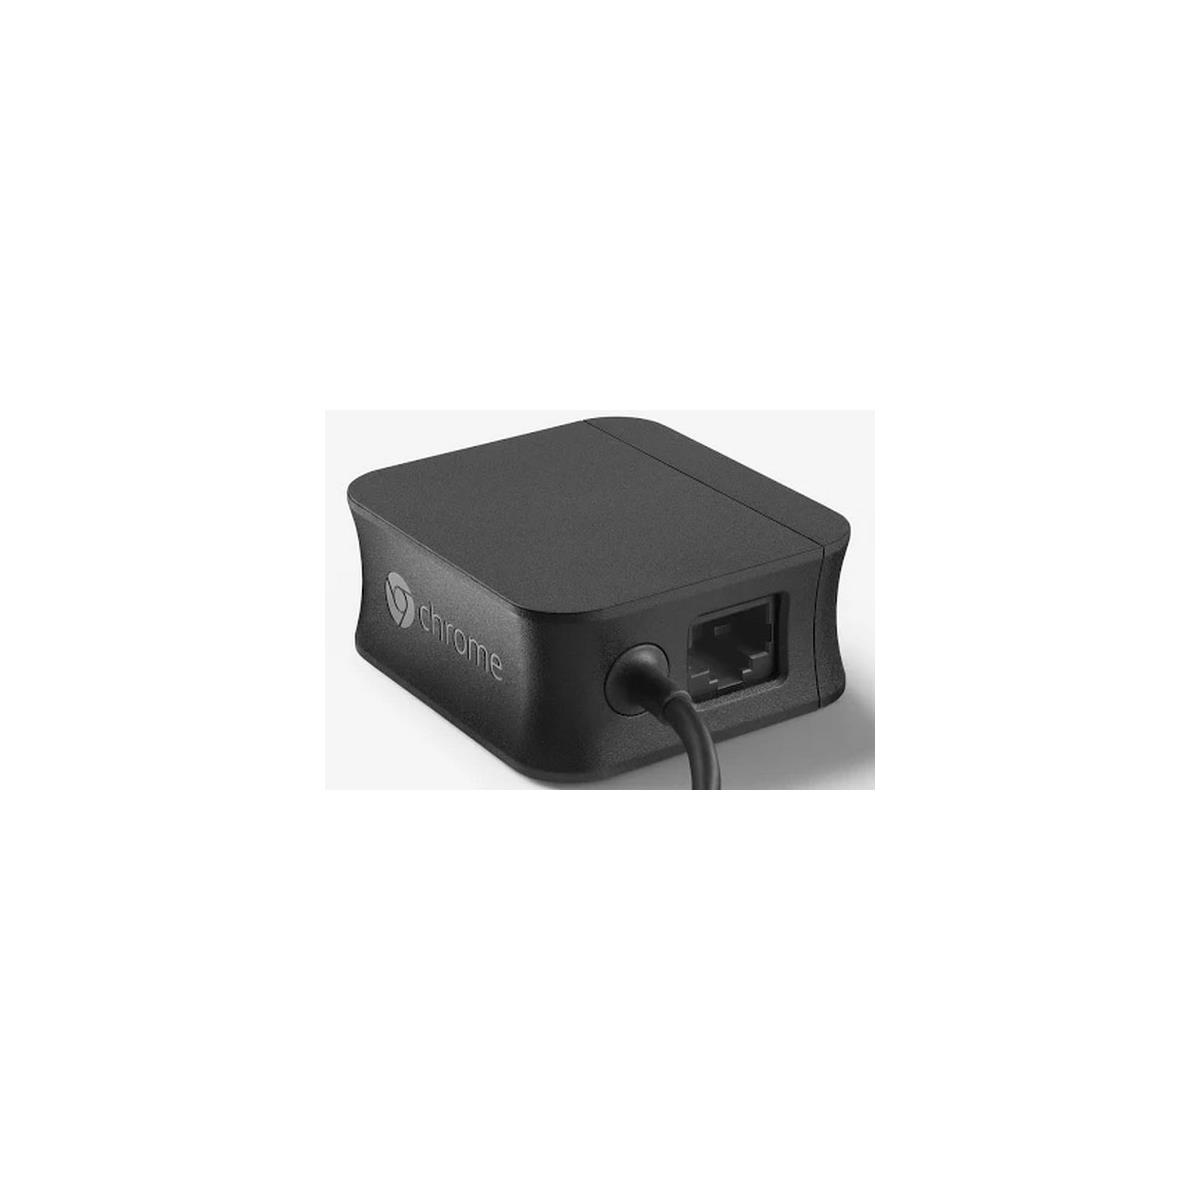 Google Chromecast Receives $15 Ethernet Adapter Option